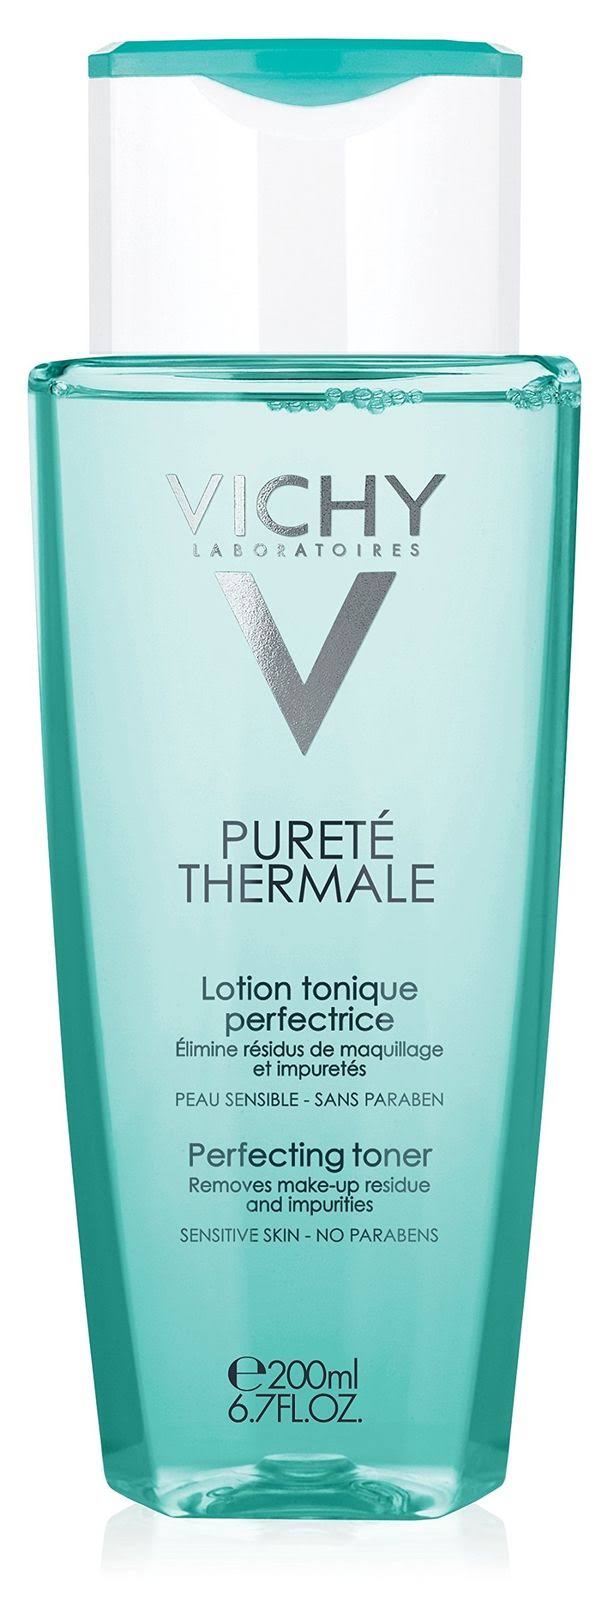 Vichy Purete Thermale Perfecting Toner - Sensitive Skin, 200ml